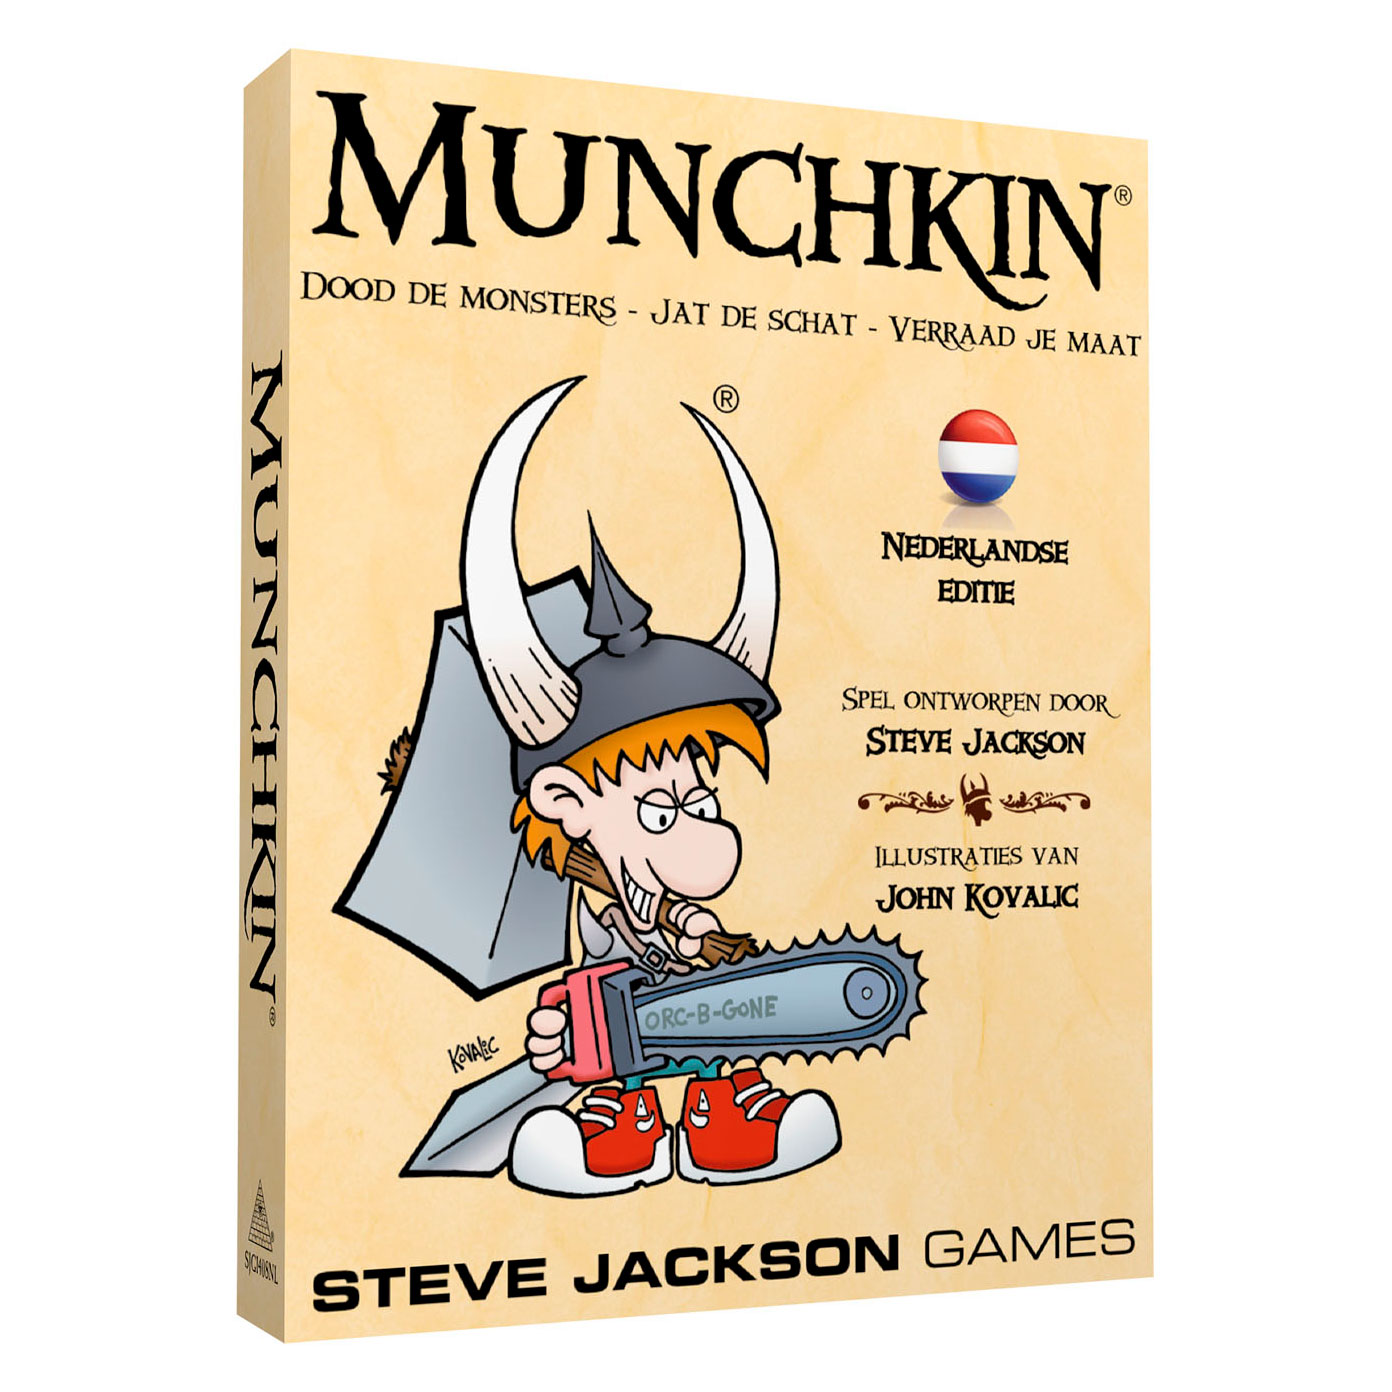 Acheter Jeu de cartes Munchkin en ligne?